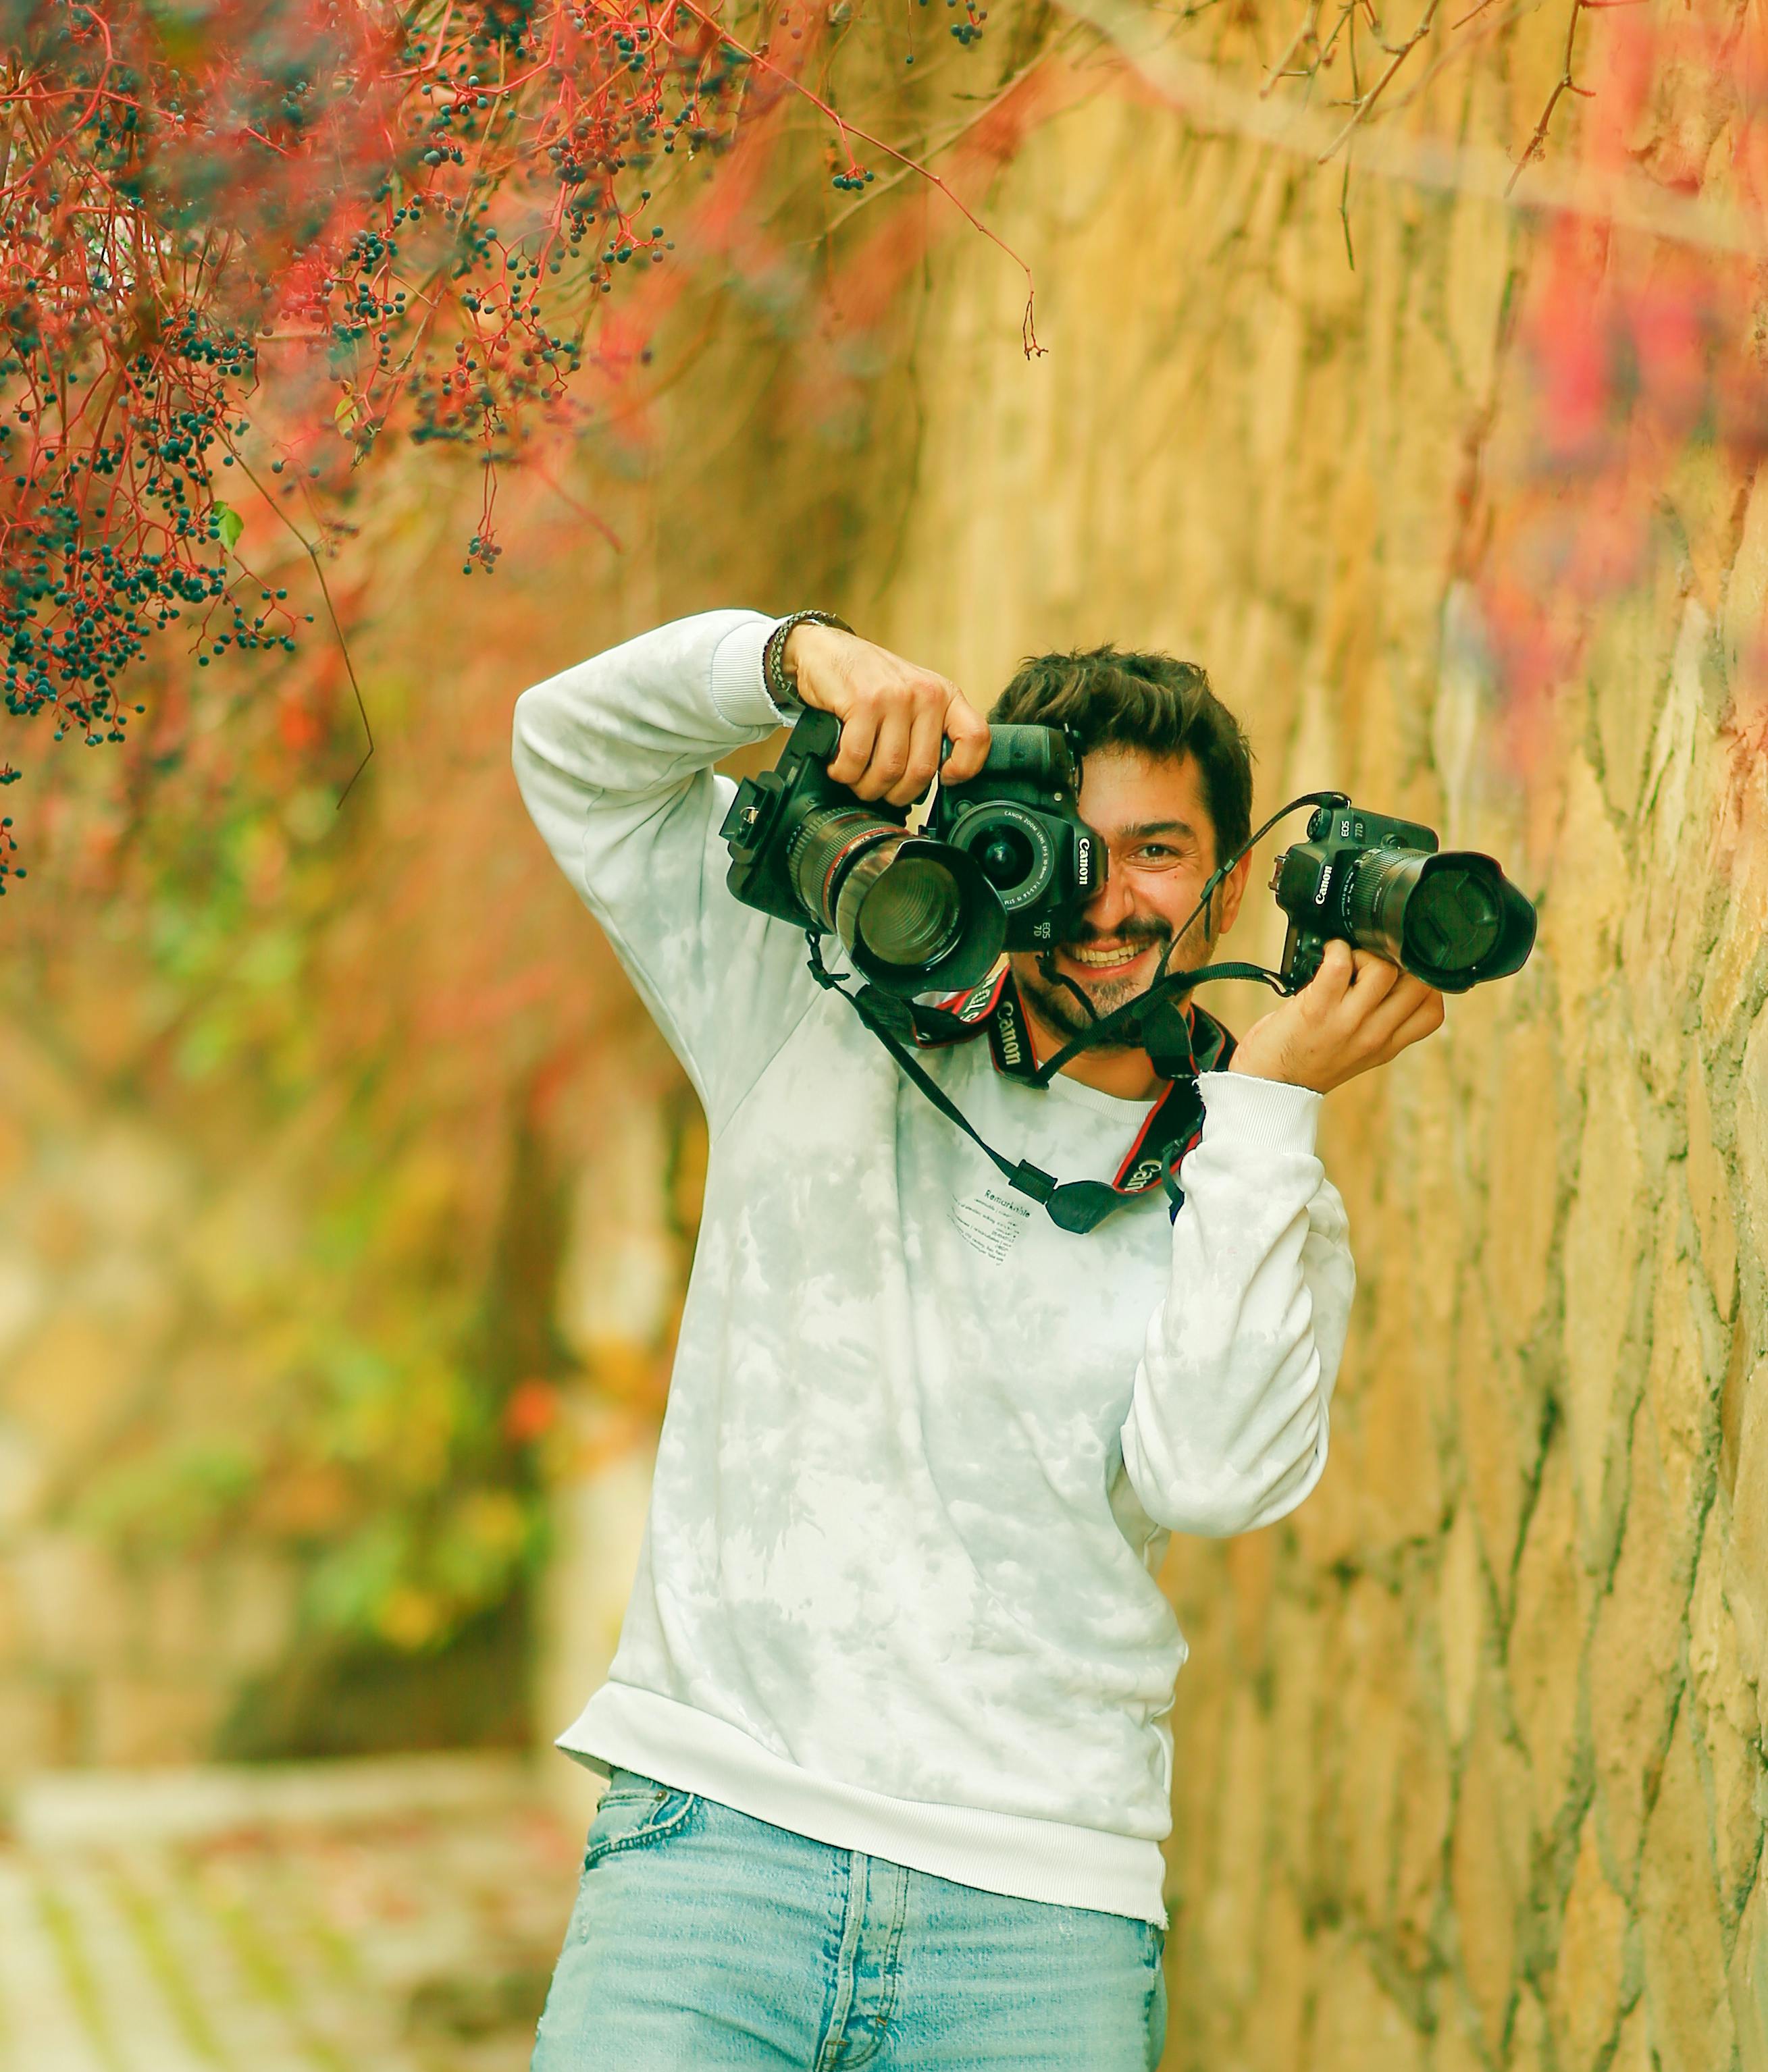 Anu Tirur - Photographer - OJO Frames | LinkedIn